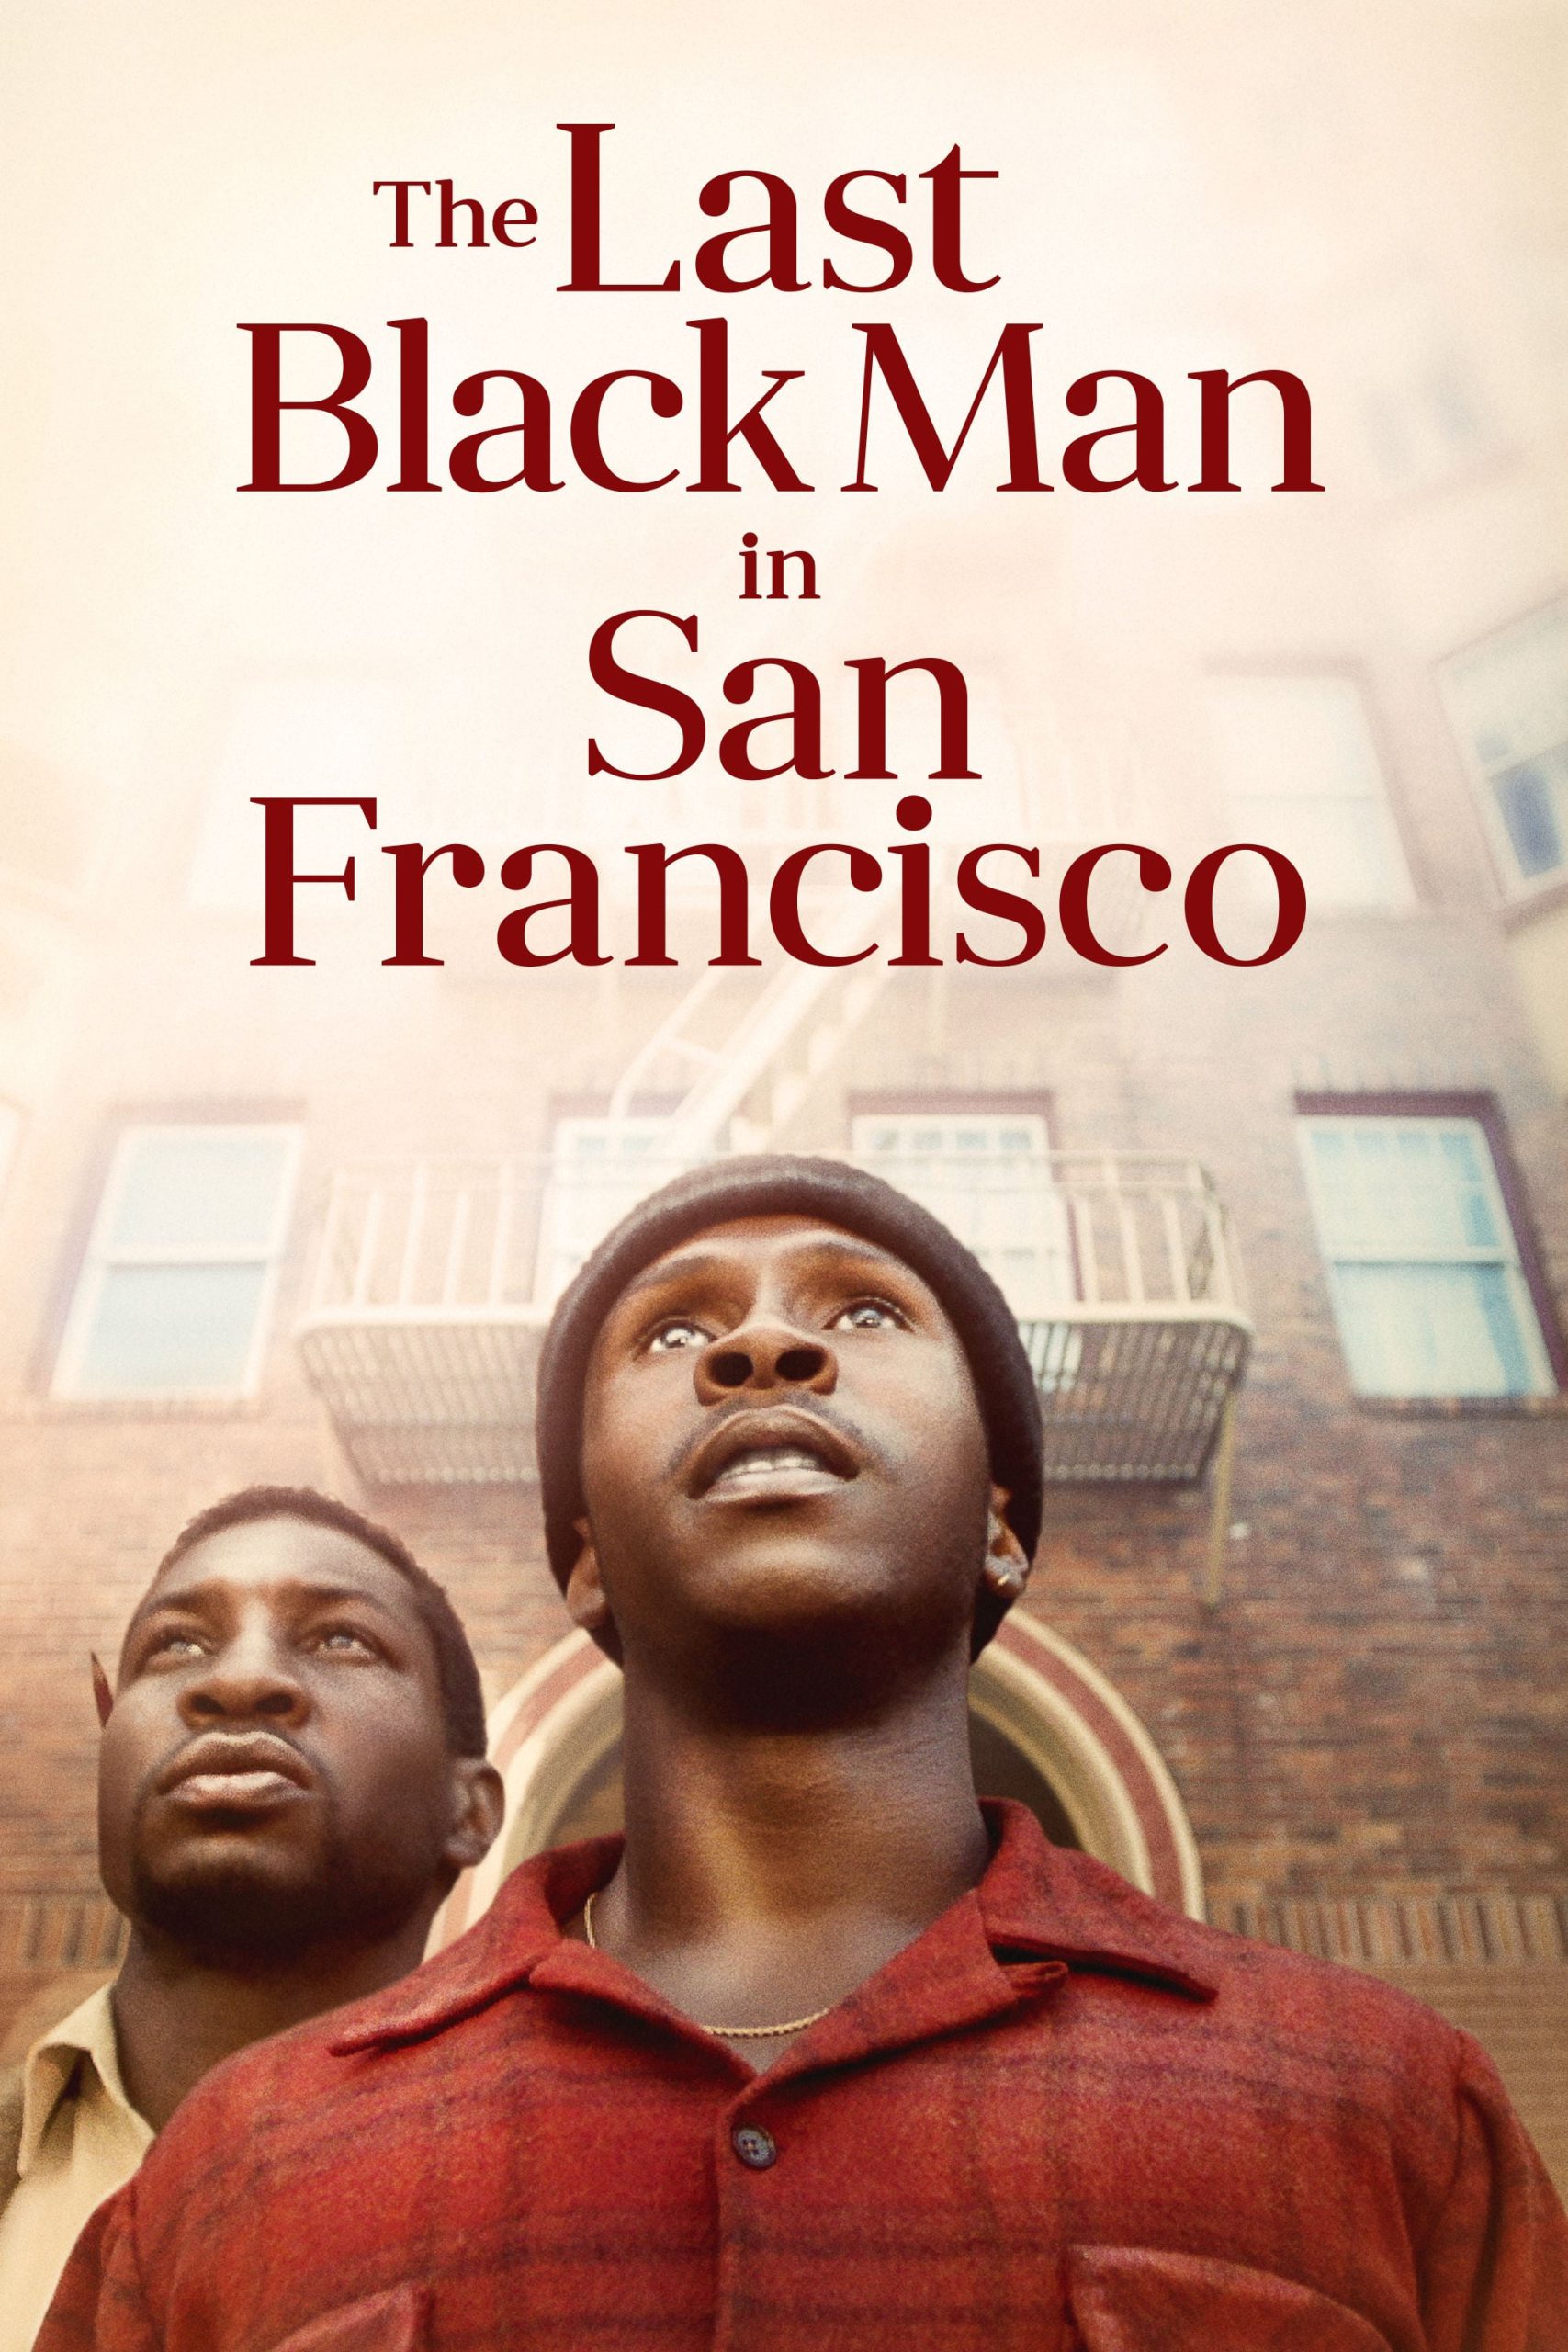 The Last Black Man in San Francisco [Sub-ITA] (2019)